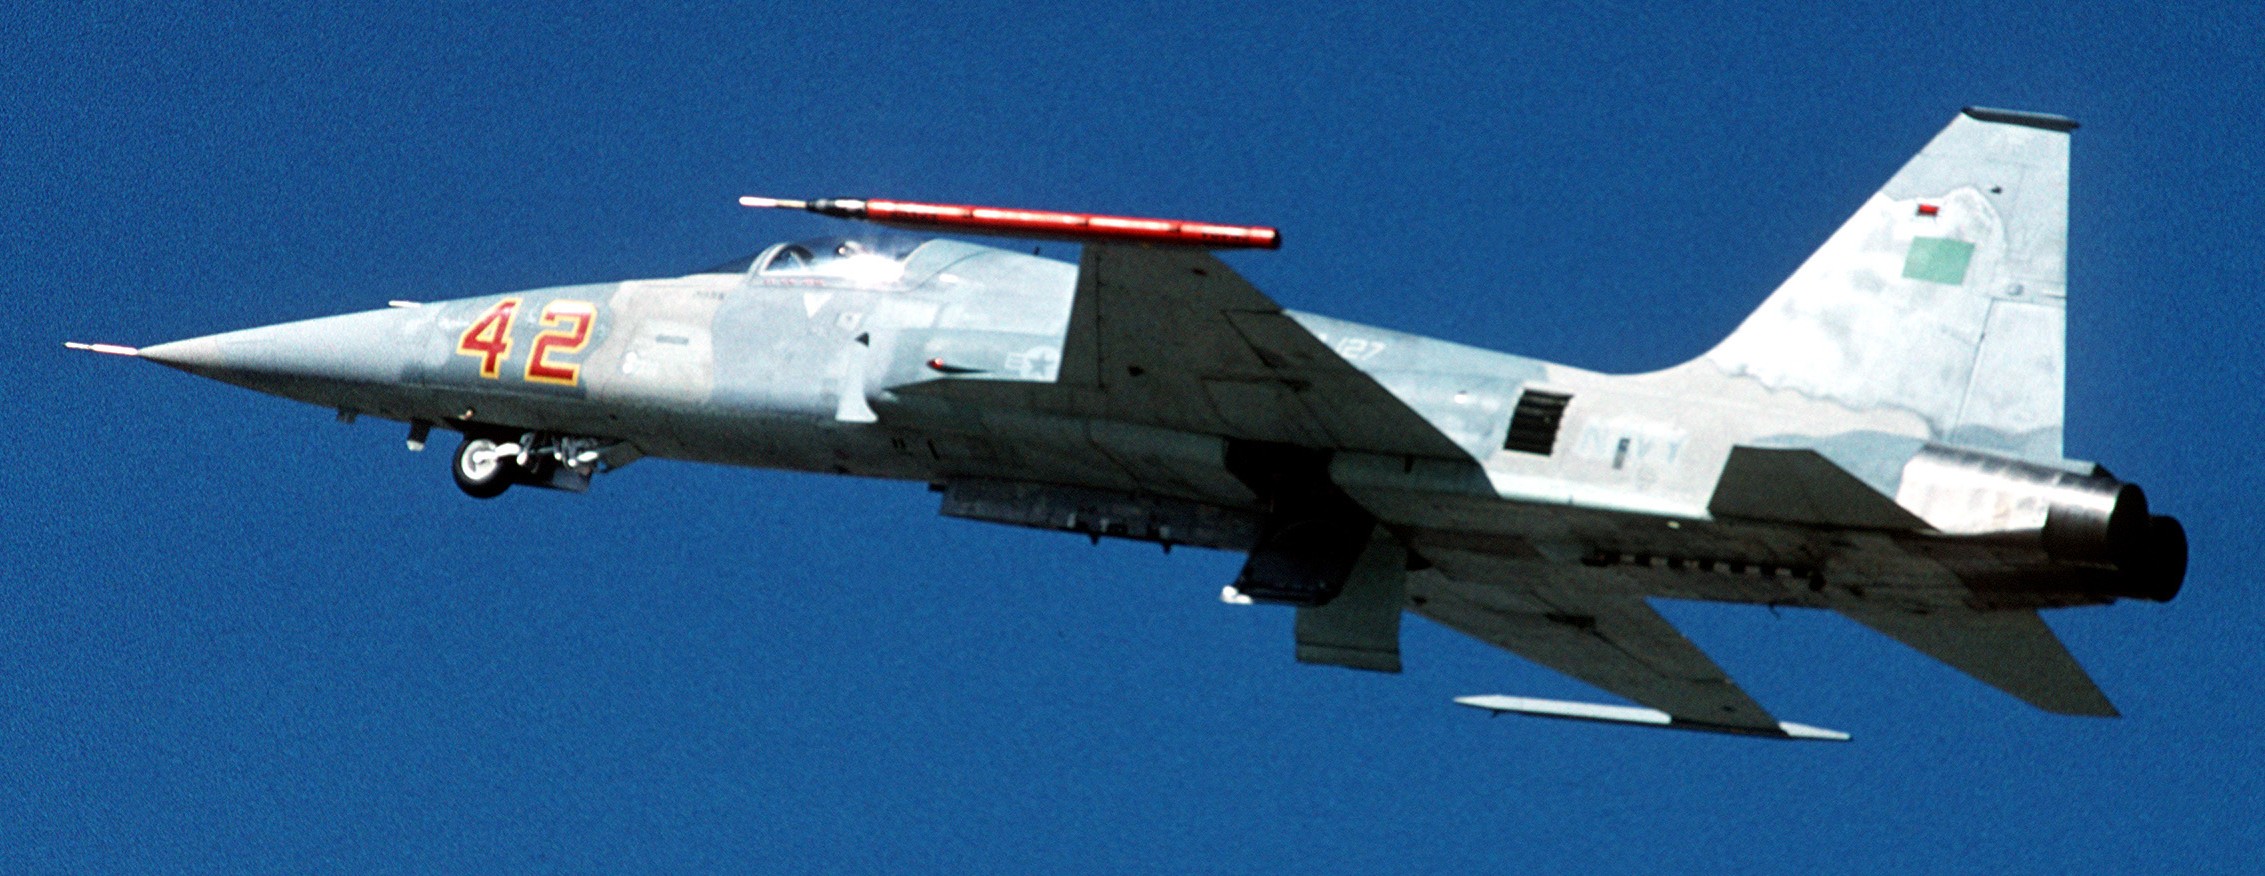 vfa-127 desert bogeys strike fighter squadron f-5e tiger 1993 27